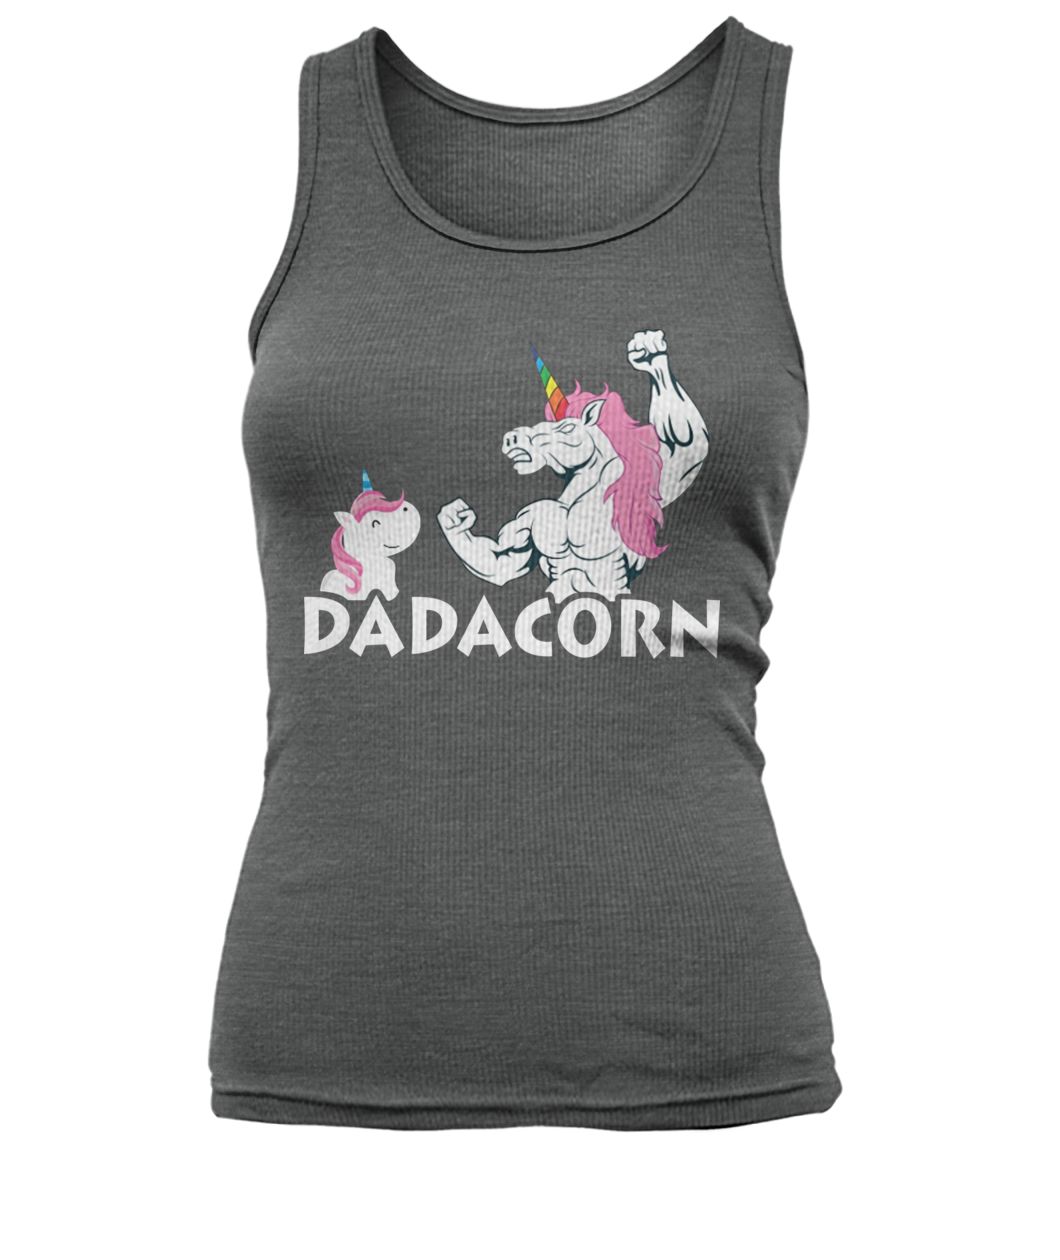 Unicorn dadacorn women's tank top